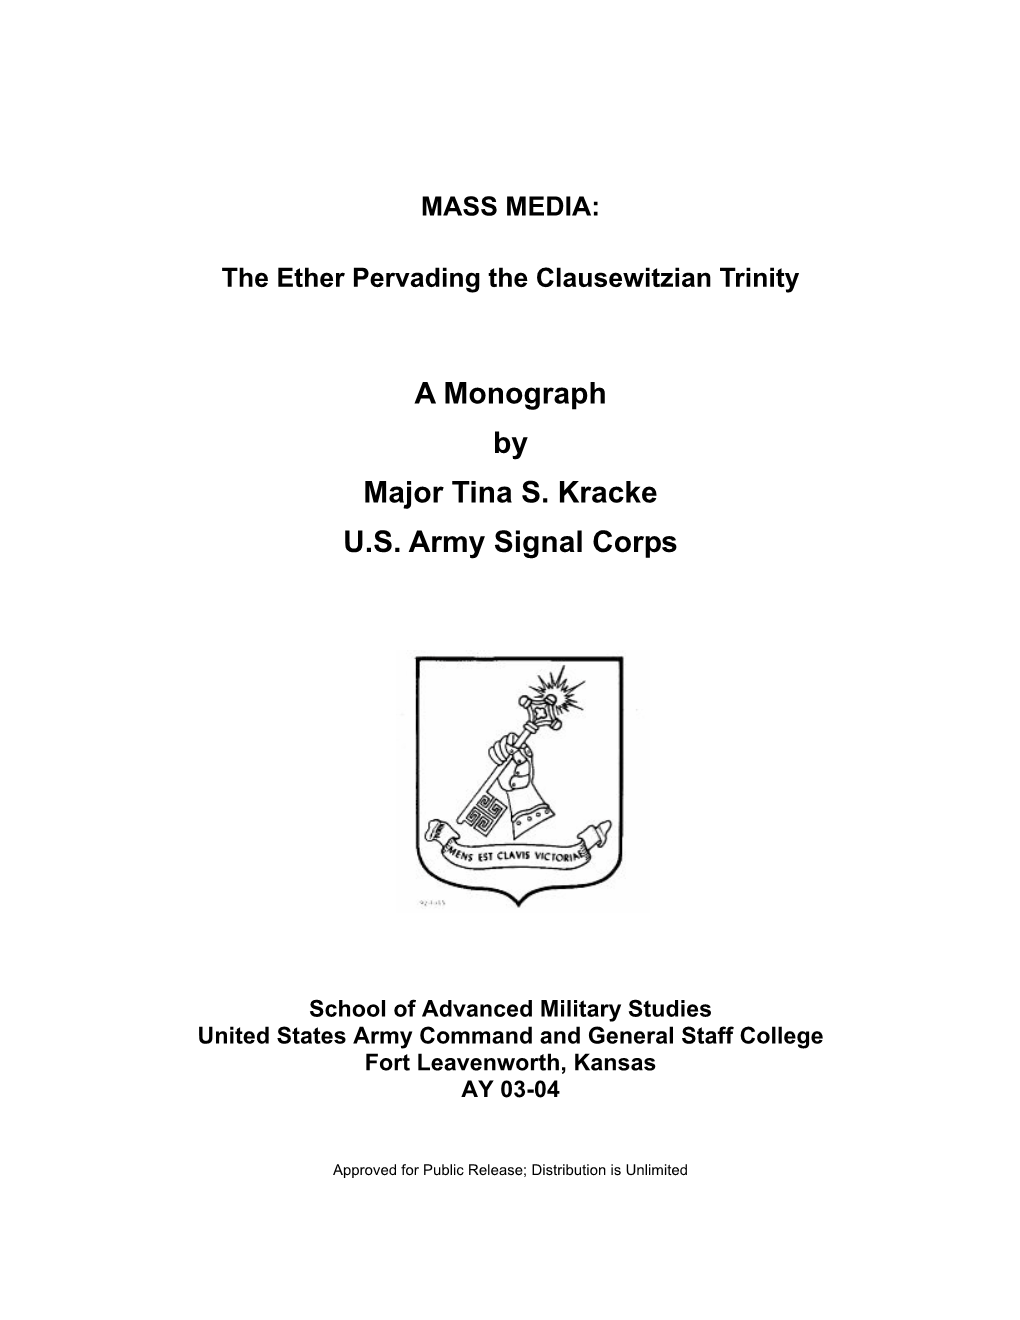 A Monograph by Major Tina S. Kracke U.S. Army Signal Corps